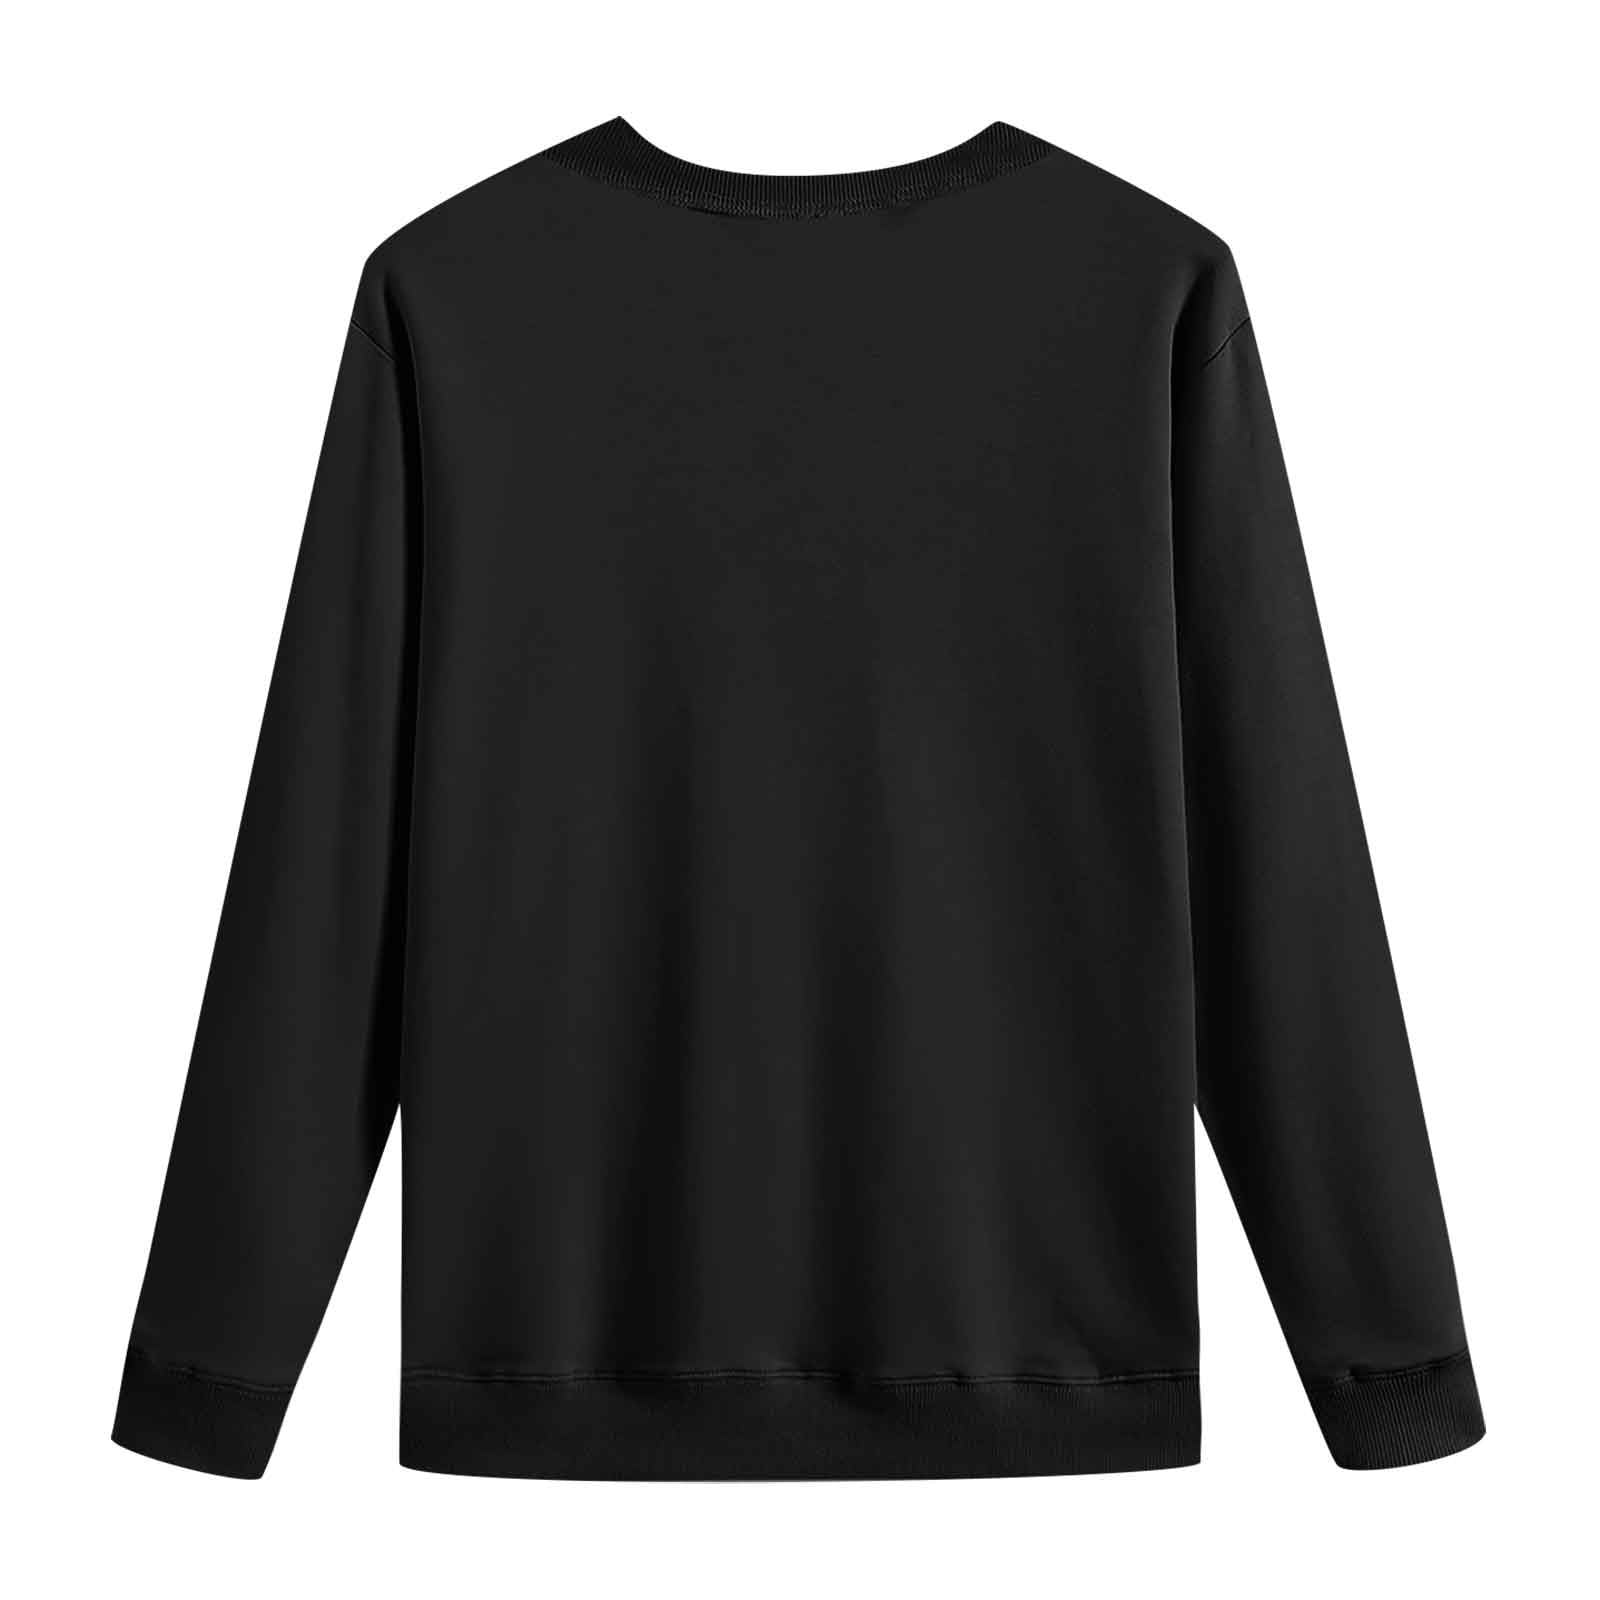 YOTAMI Women's Sweatshirts Fashion Round Neck Casual Long Sleeve